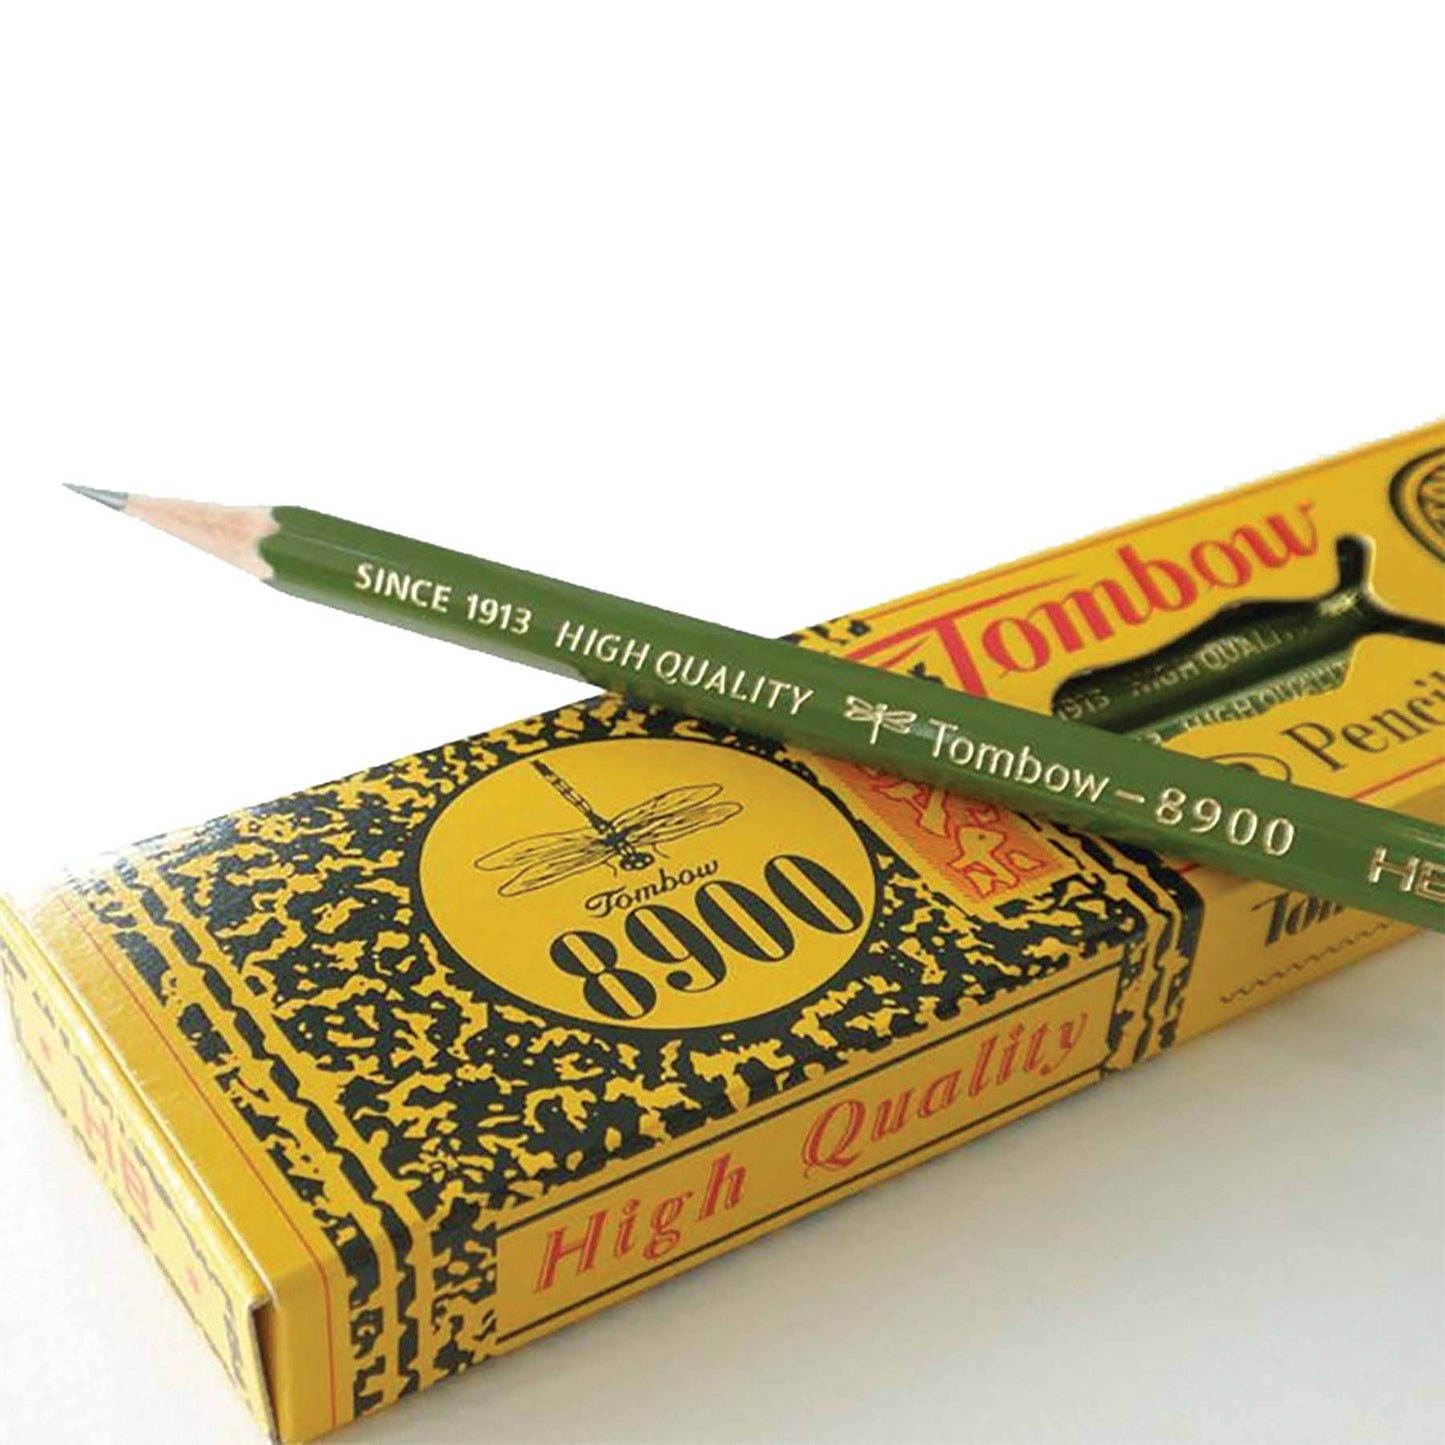 8900 Drawing Pencils - HB